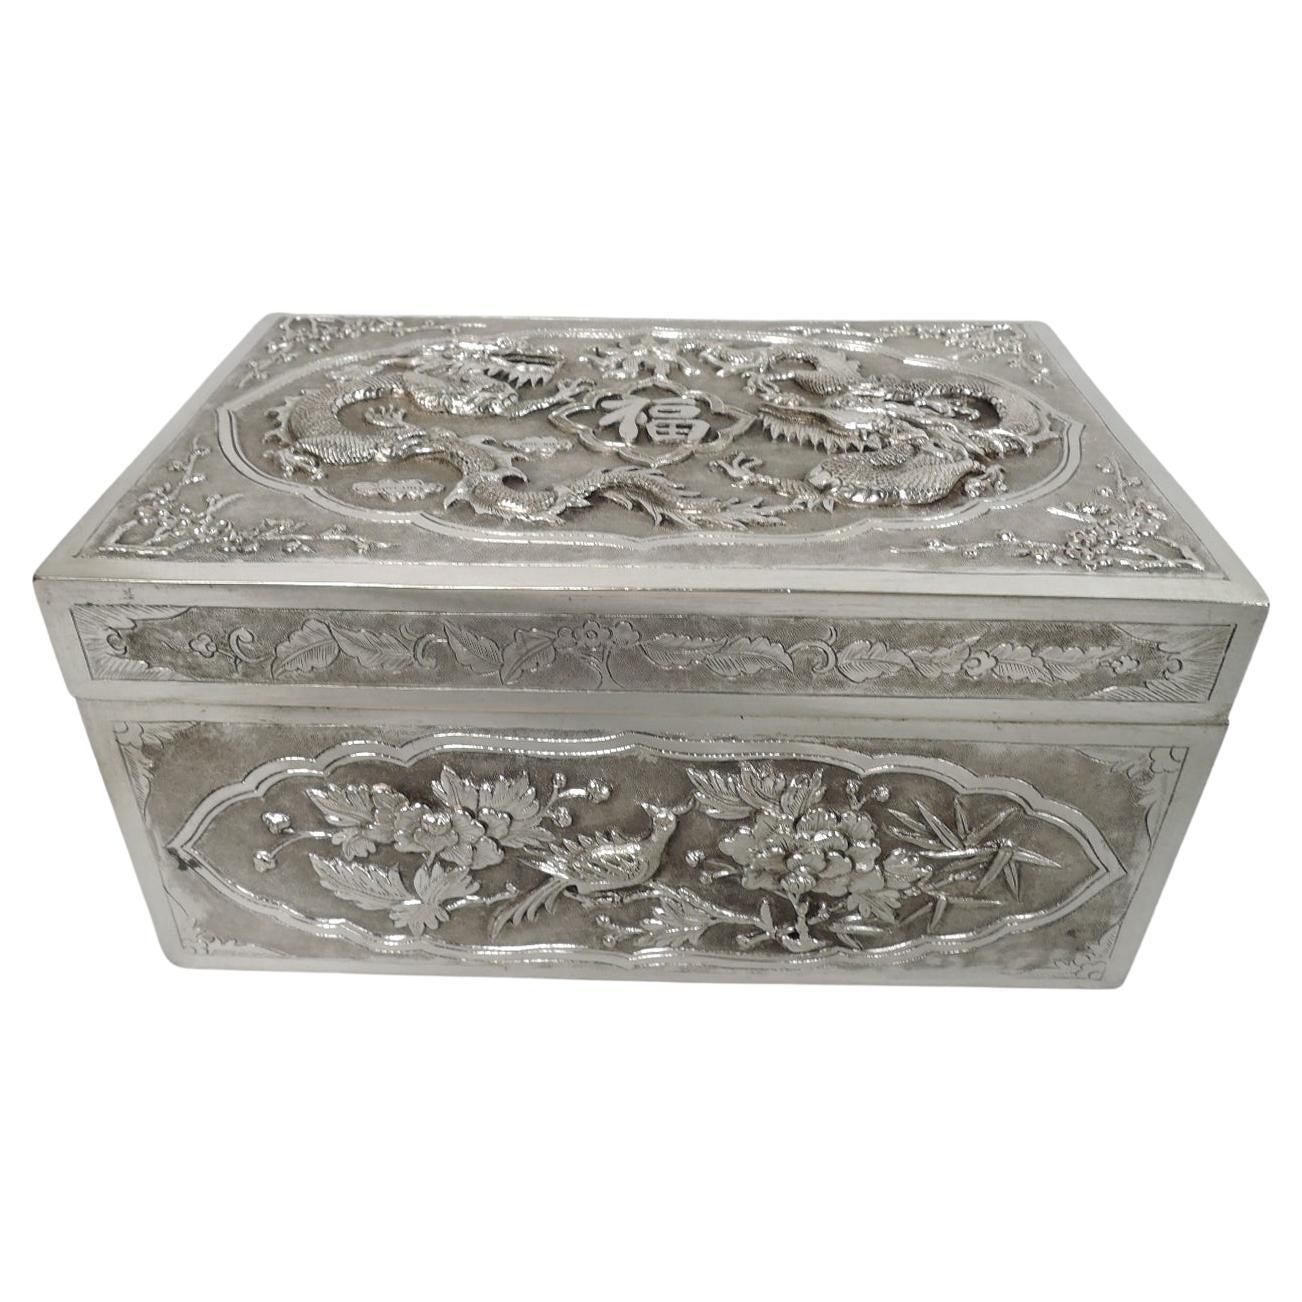 Antique Vietnamese Silver Treasure Box with Guardian Dragons